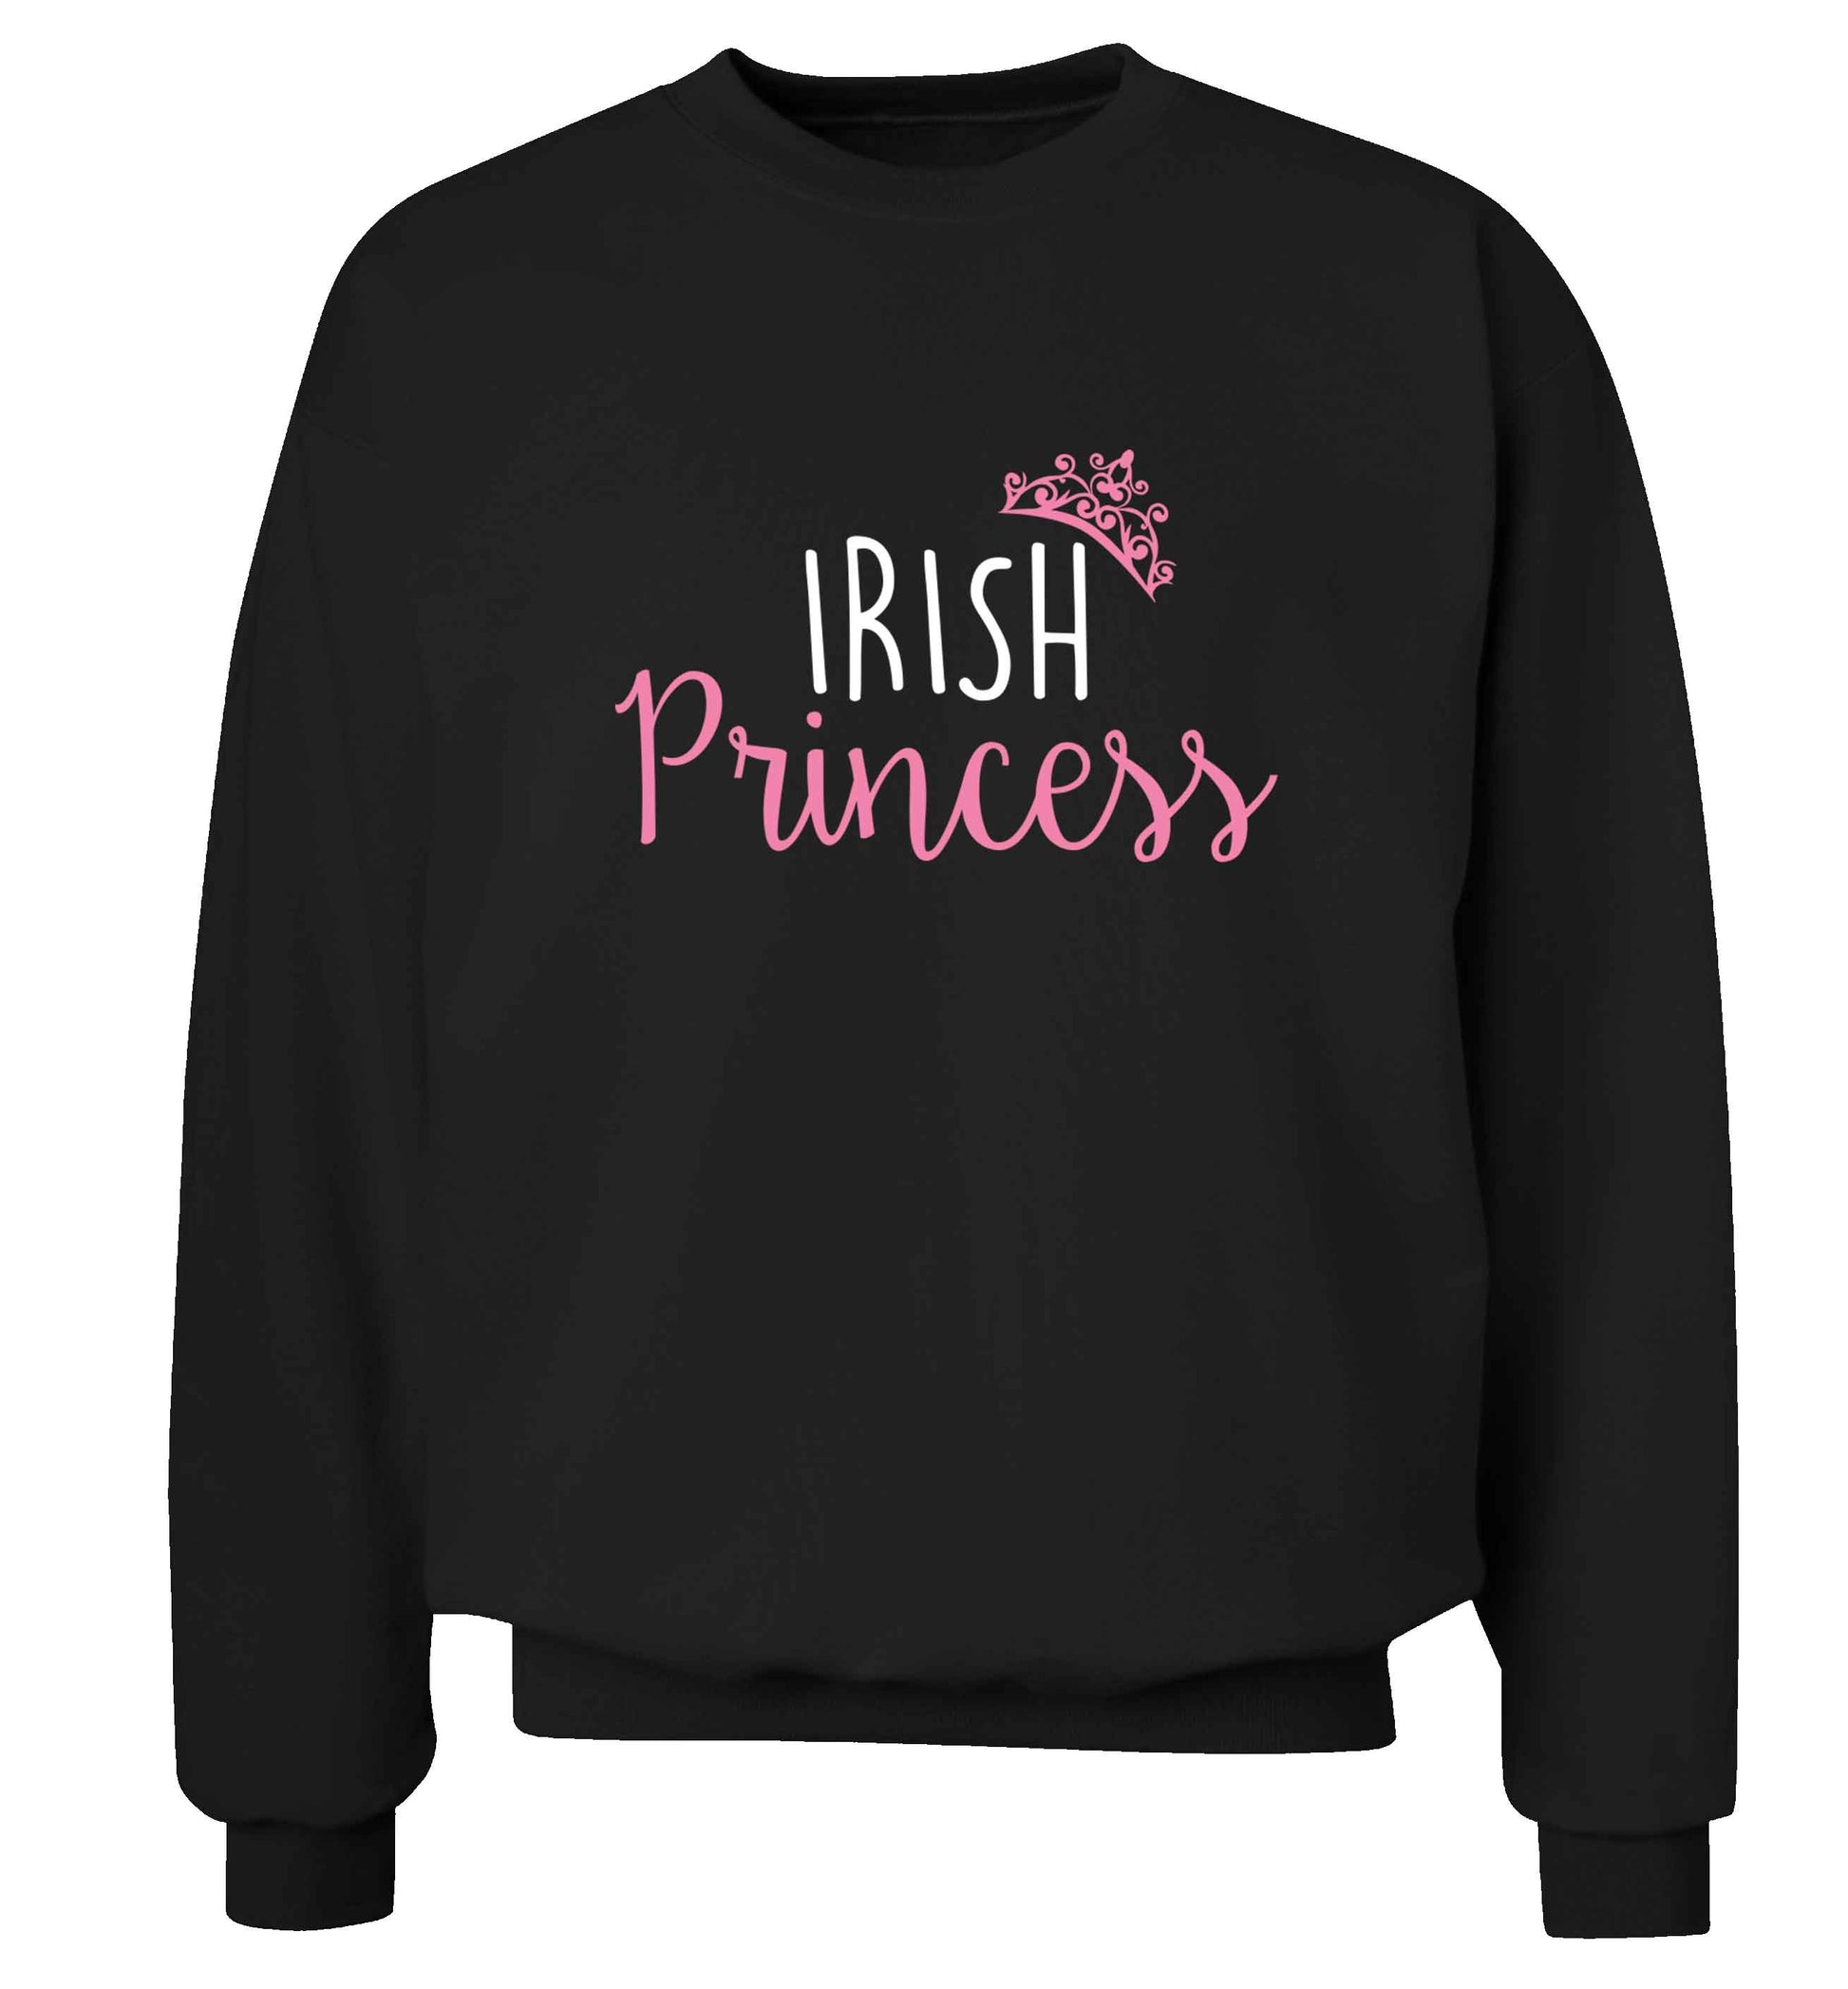 Irish princess adult's unisex black sweater 2XL